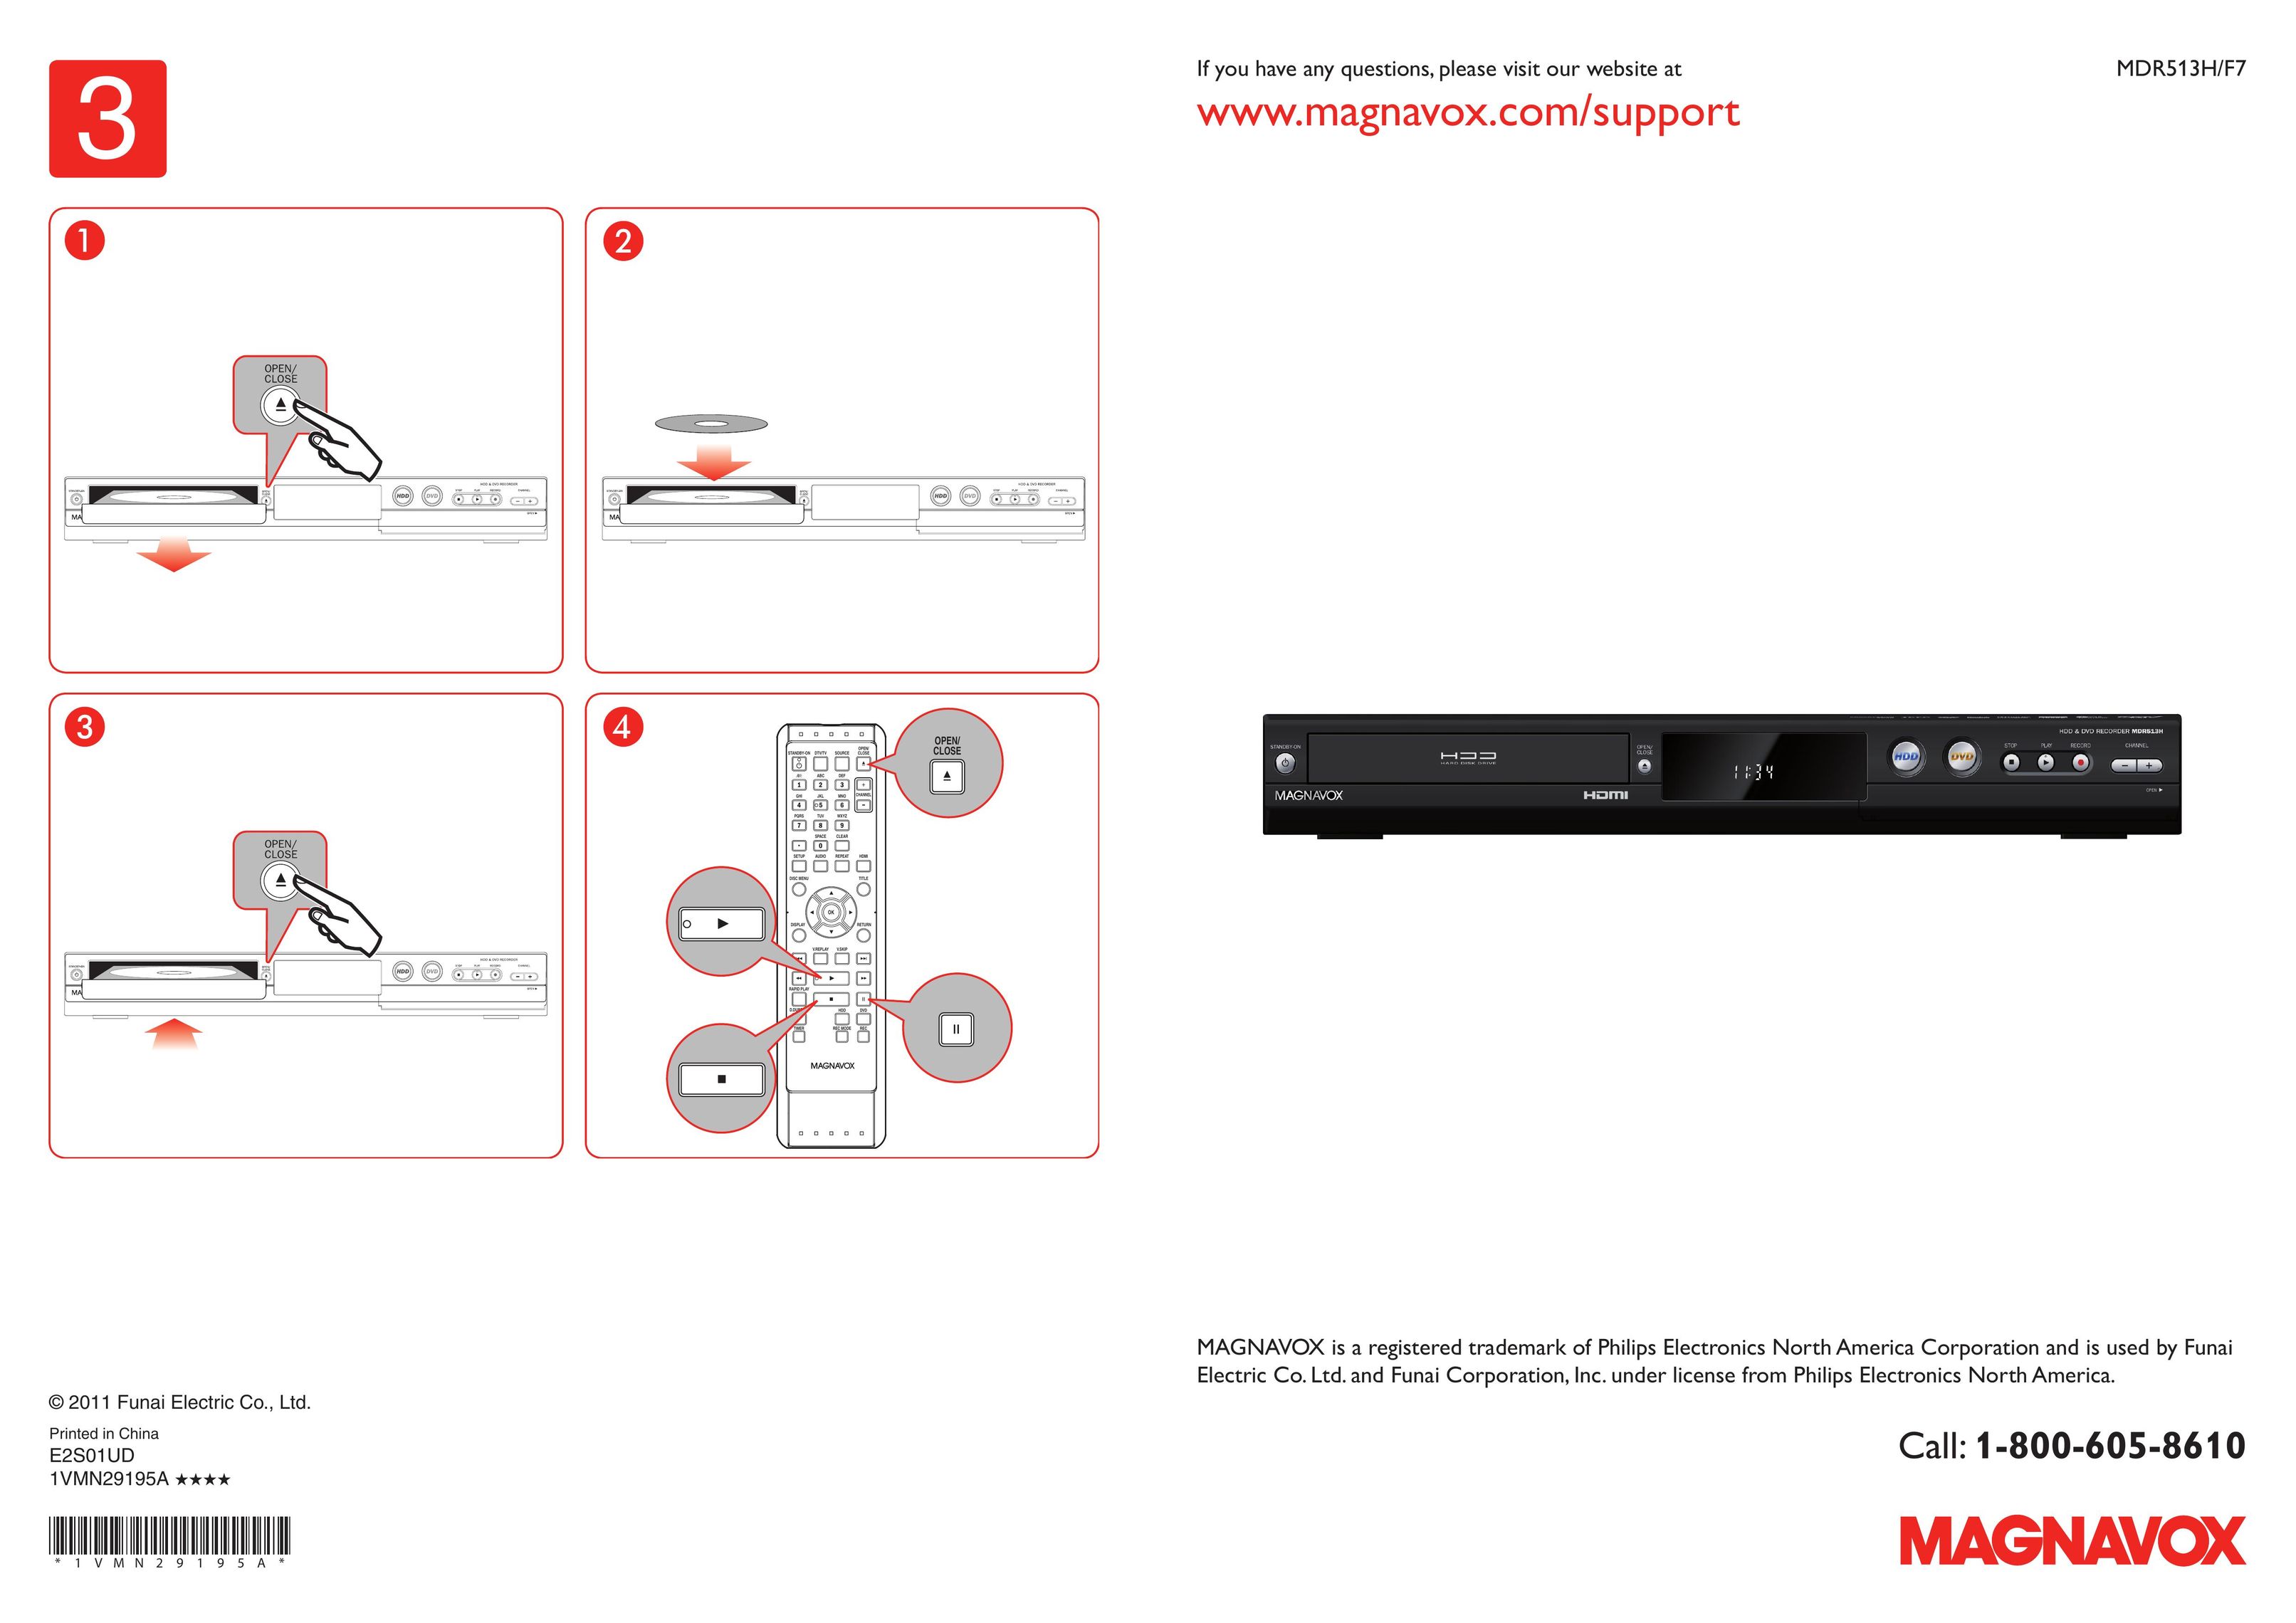 Magnavox MDR513H/F7 DVR User Manual